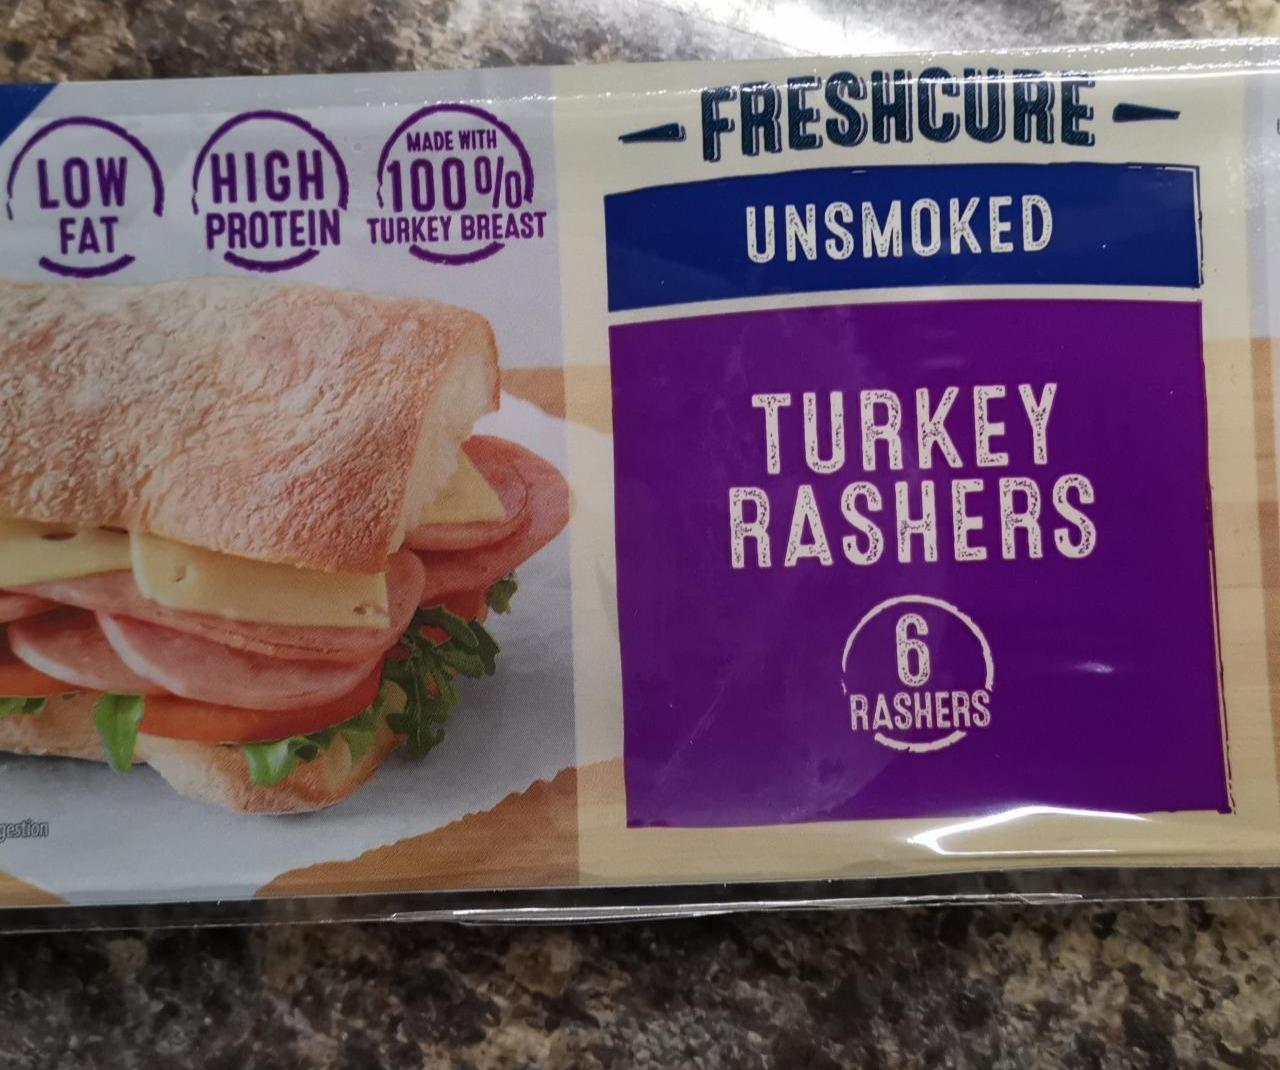 Fotografie - Unsmoked Turkey Rashers Freshcure